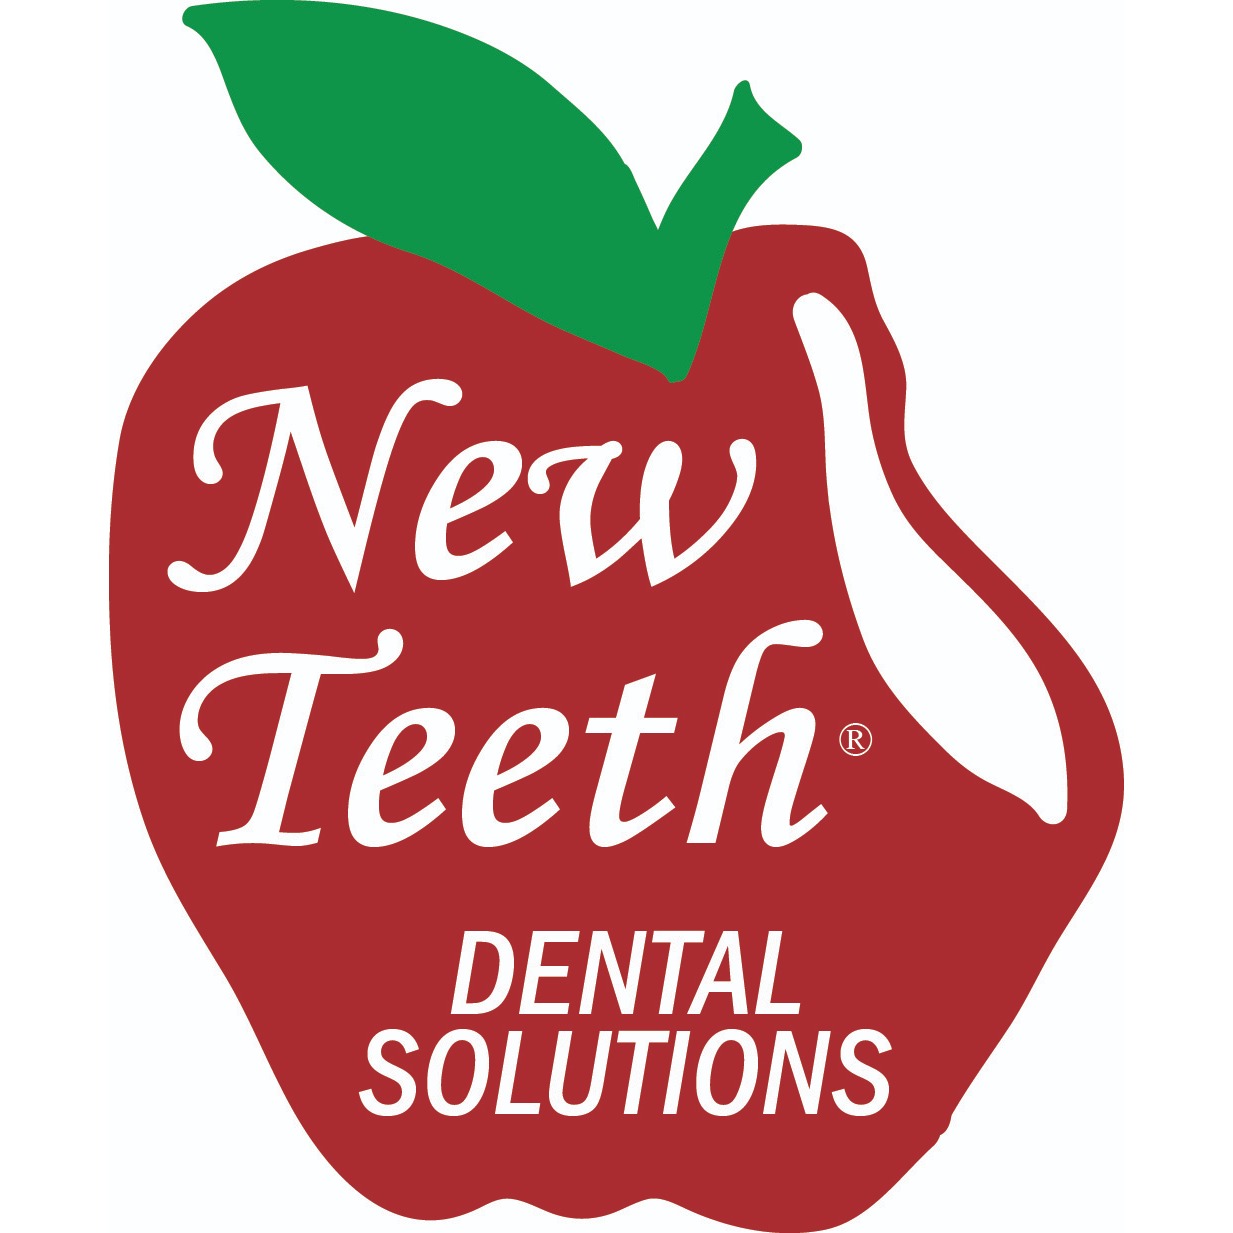 New Teeth Dental Solutions - League City Logo